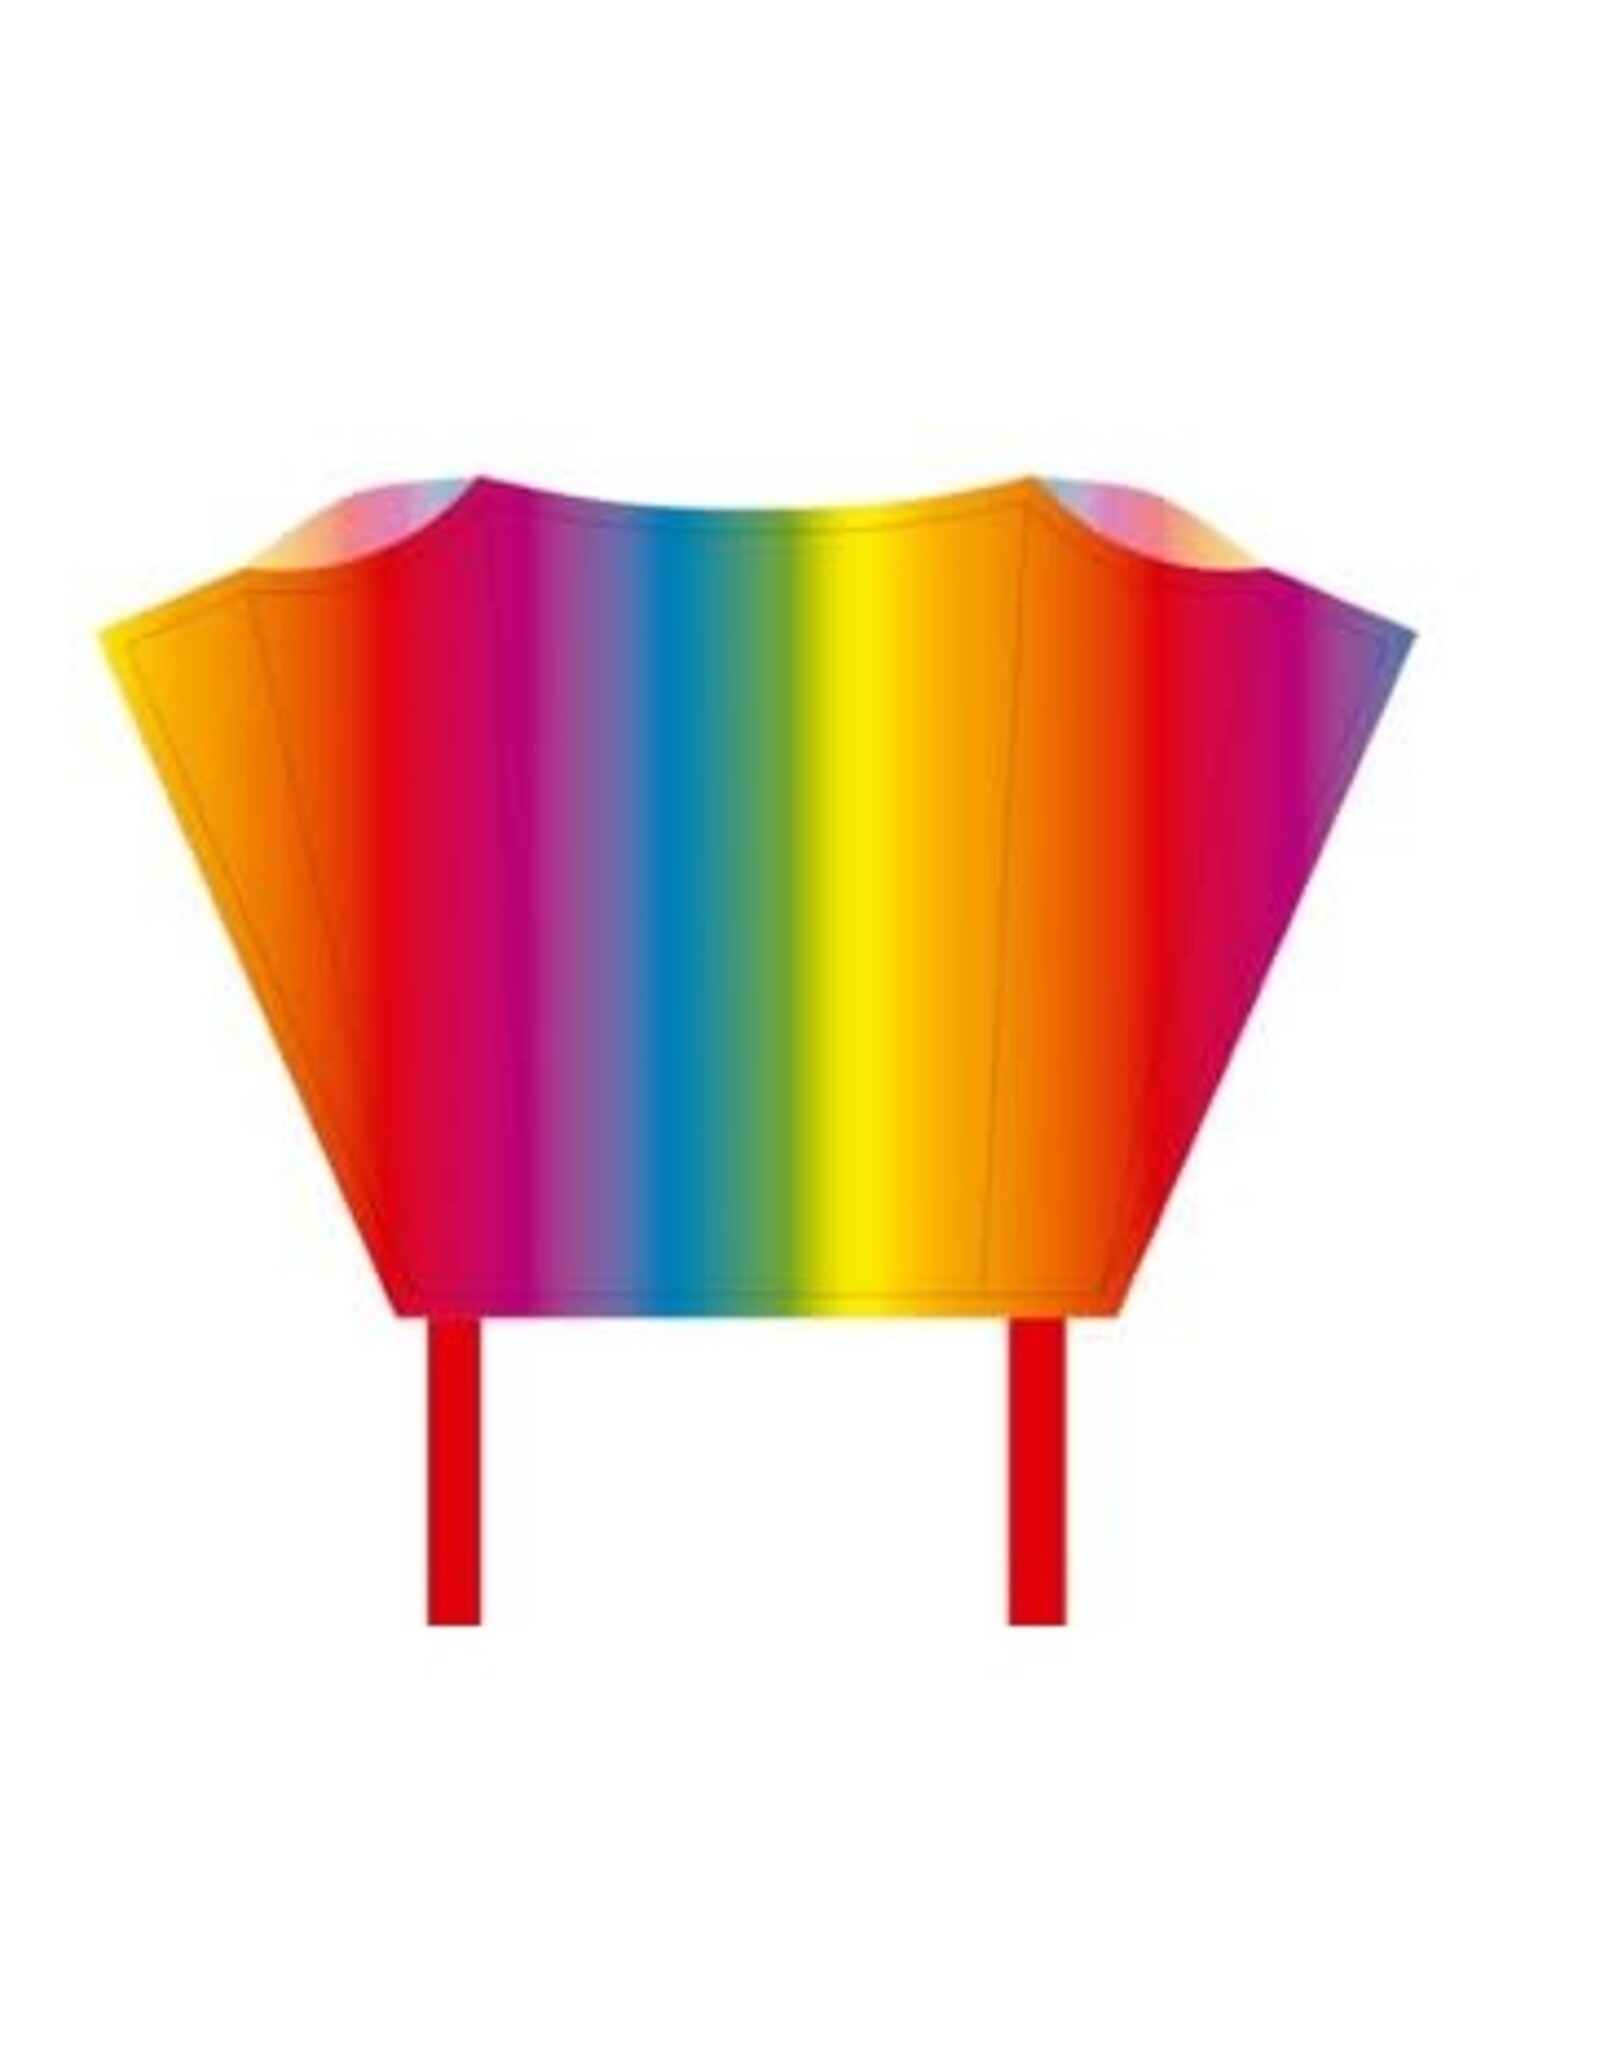 HQ Kites & Designs Sleddy Rainbow Kite